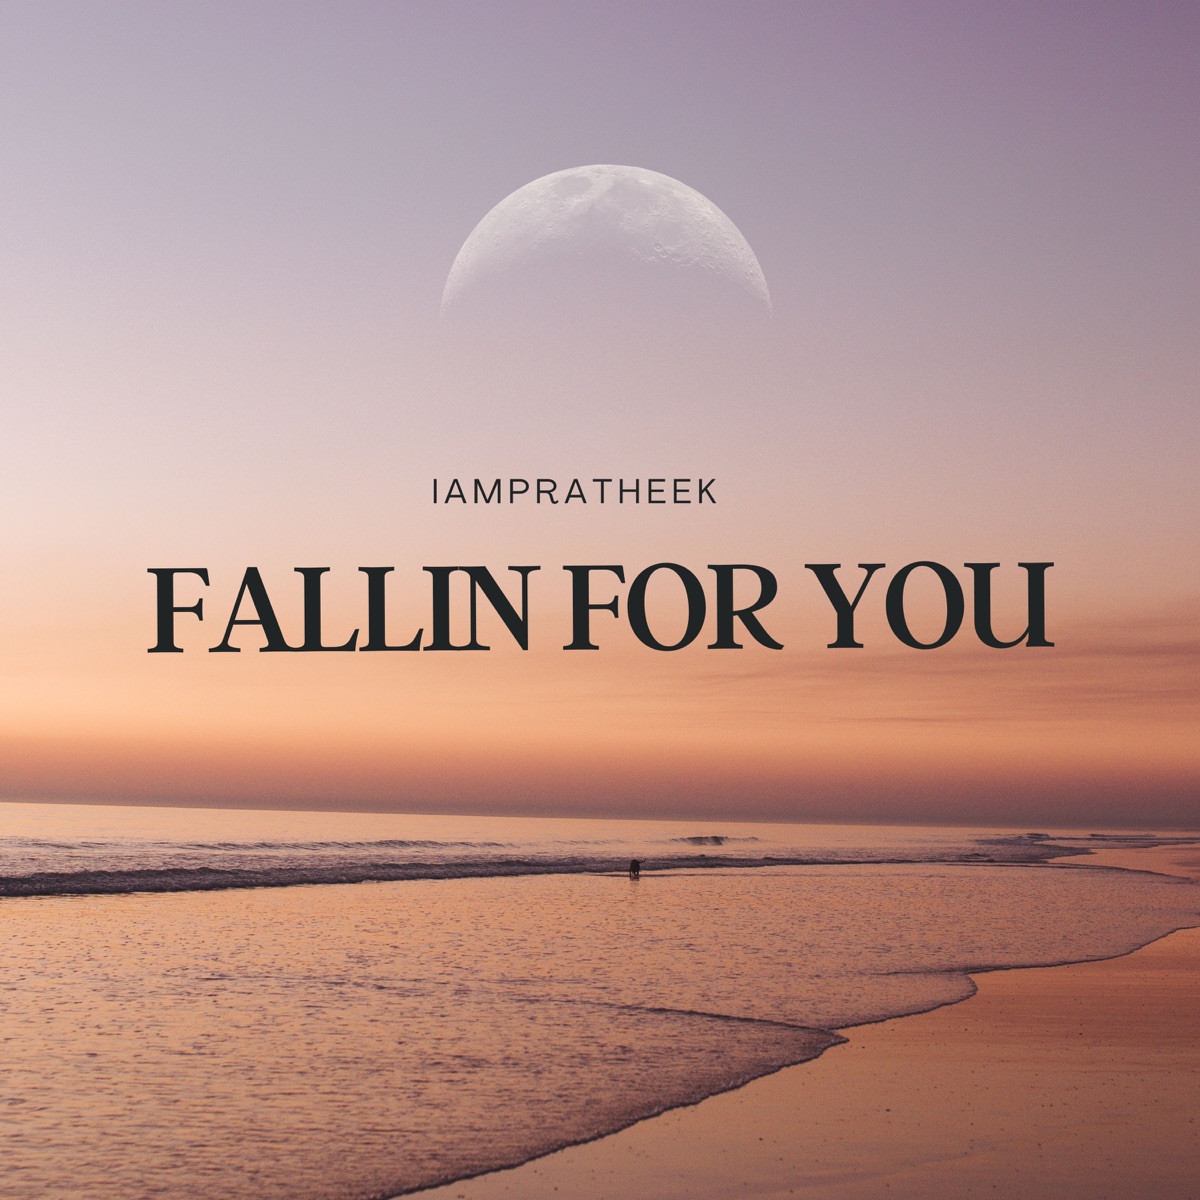 MC STAN - Astaghfirullah - Single by IAMPRATHEEK on Apple Music